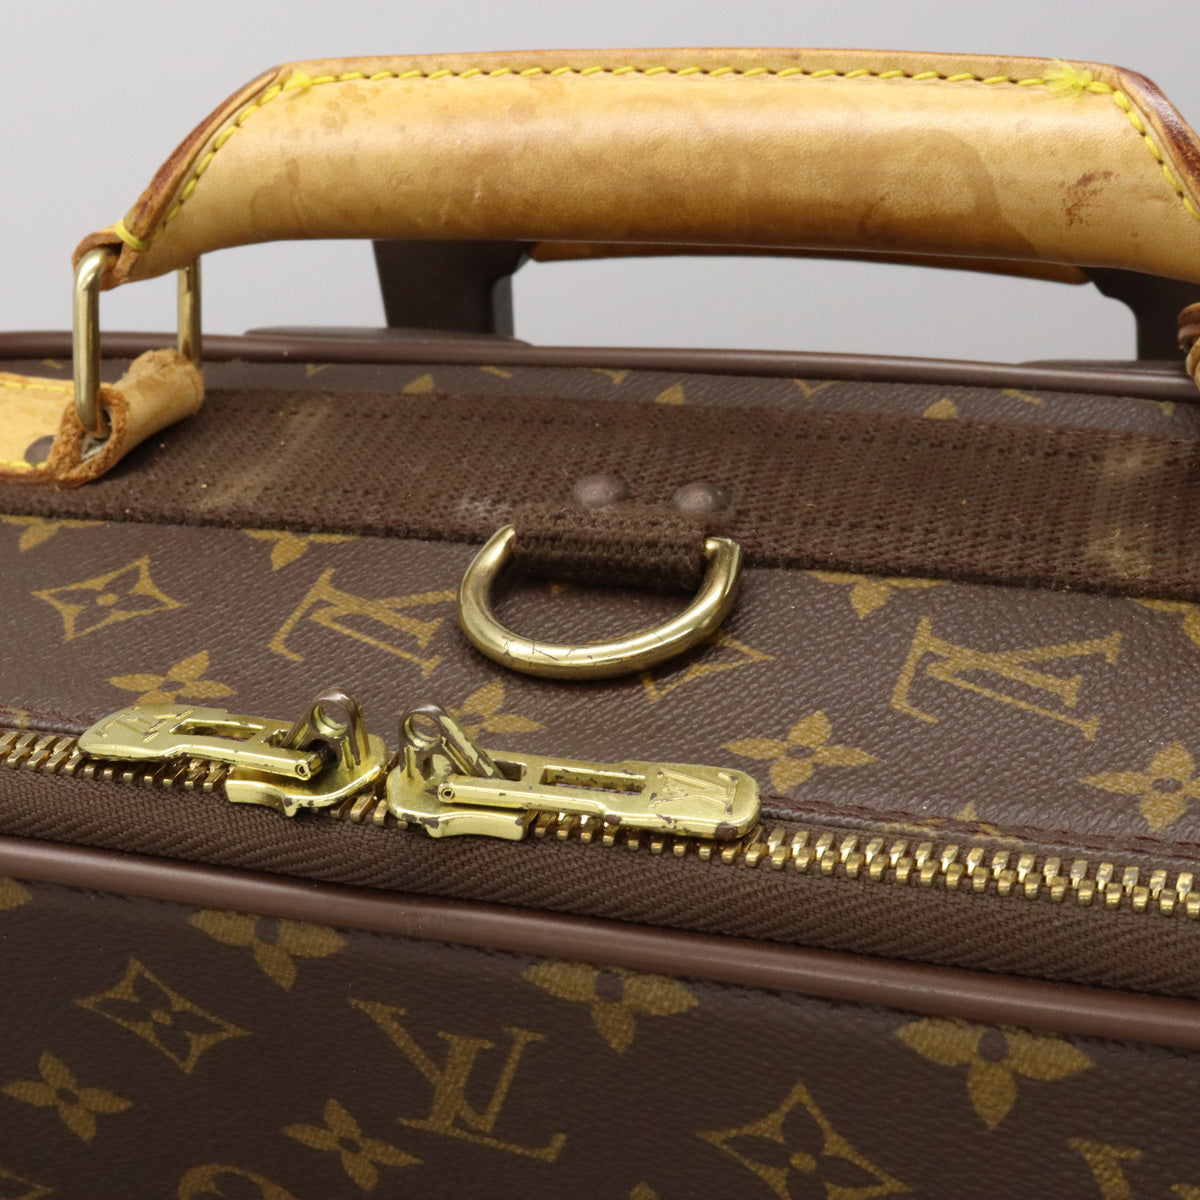 LOUIS VUITTON Monogram Pegase 55 Suitcase Roller Luggage